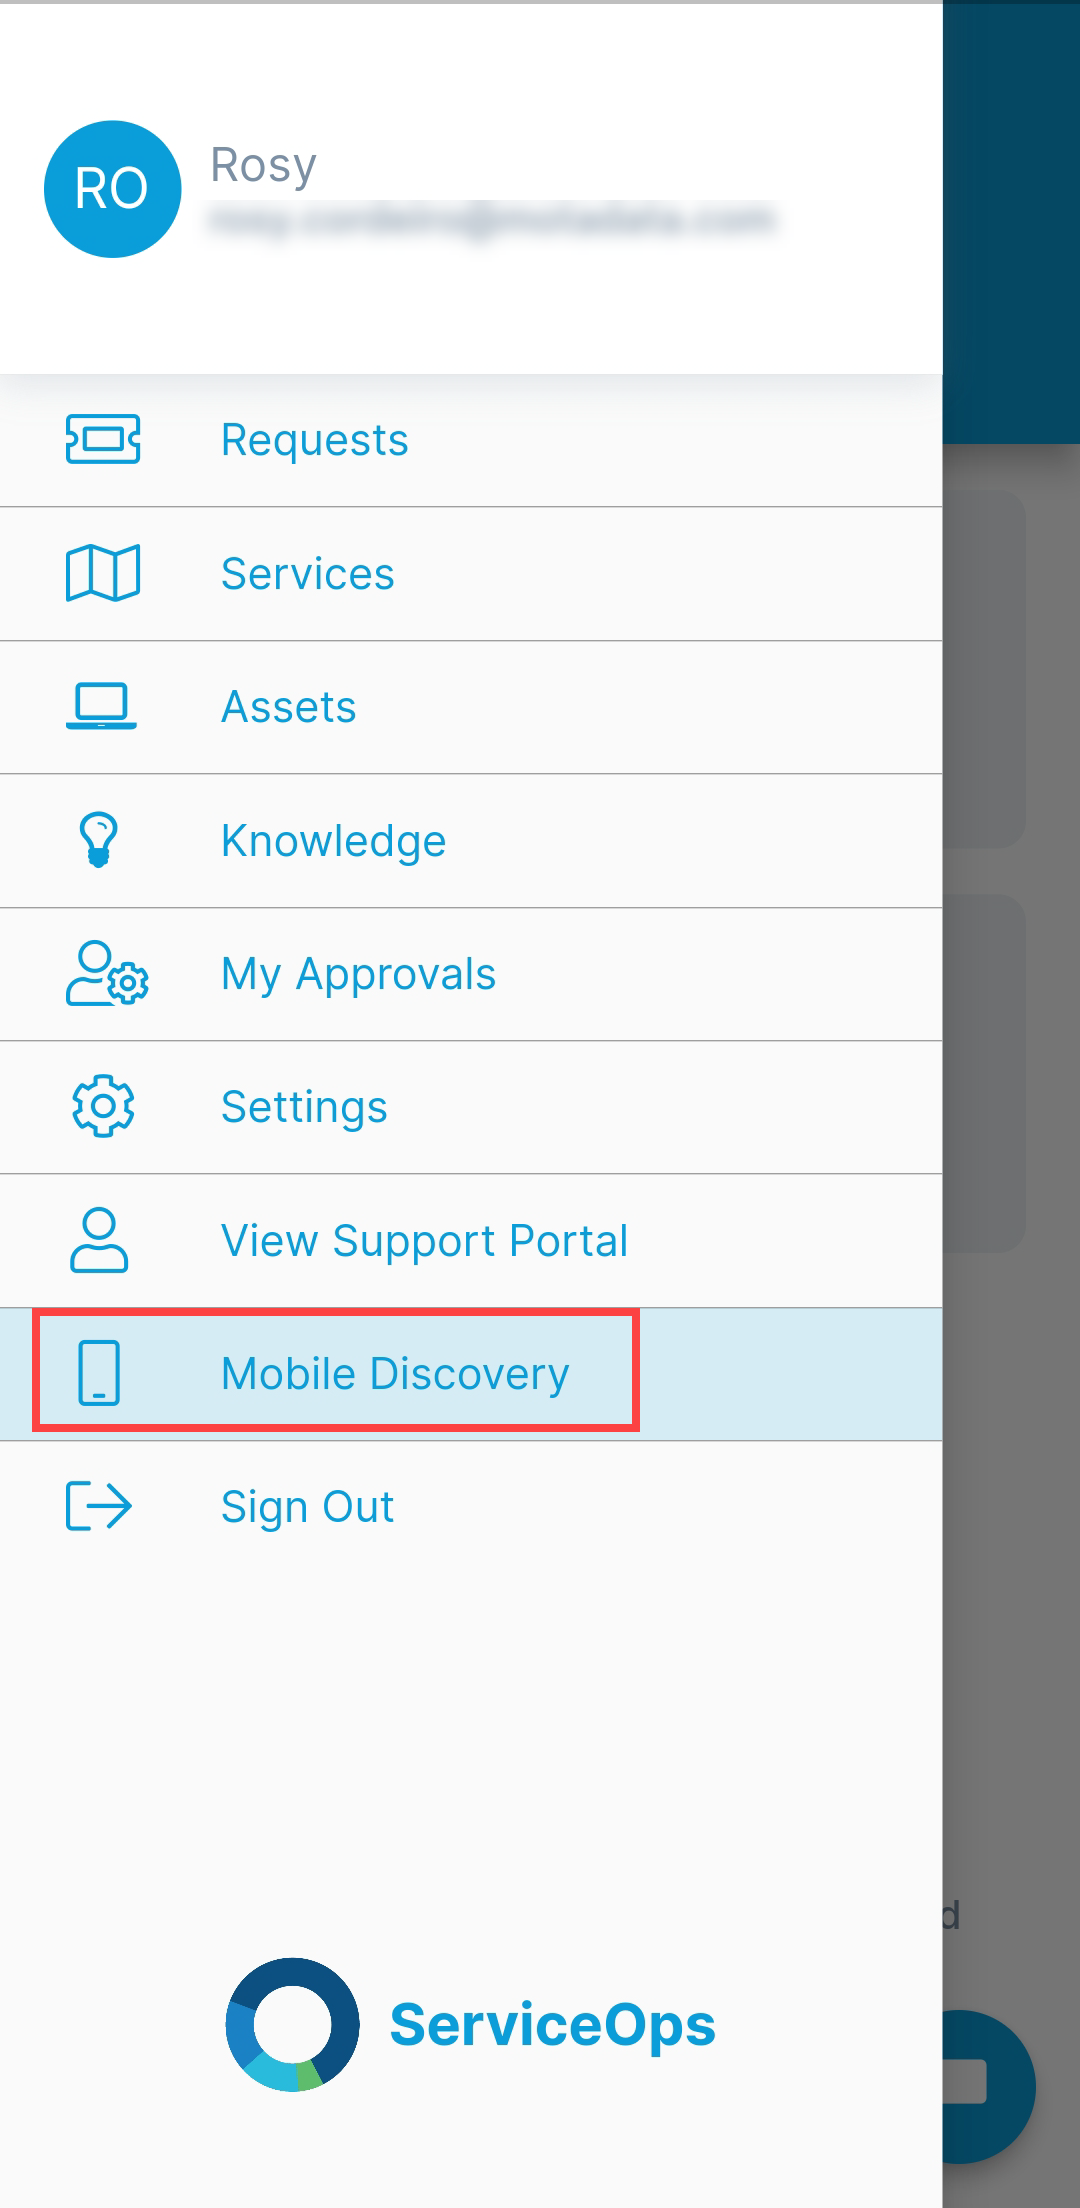 Mobile Discovery menu